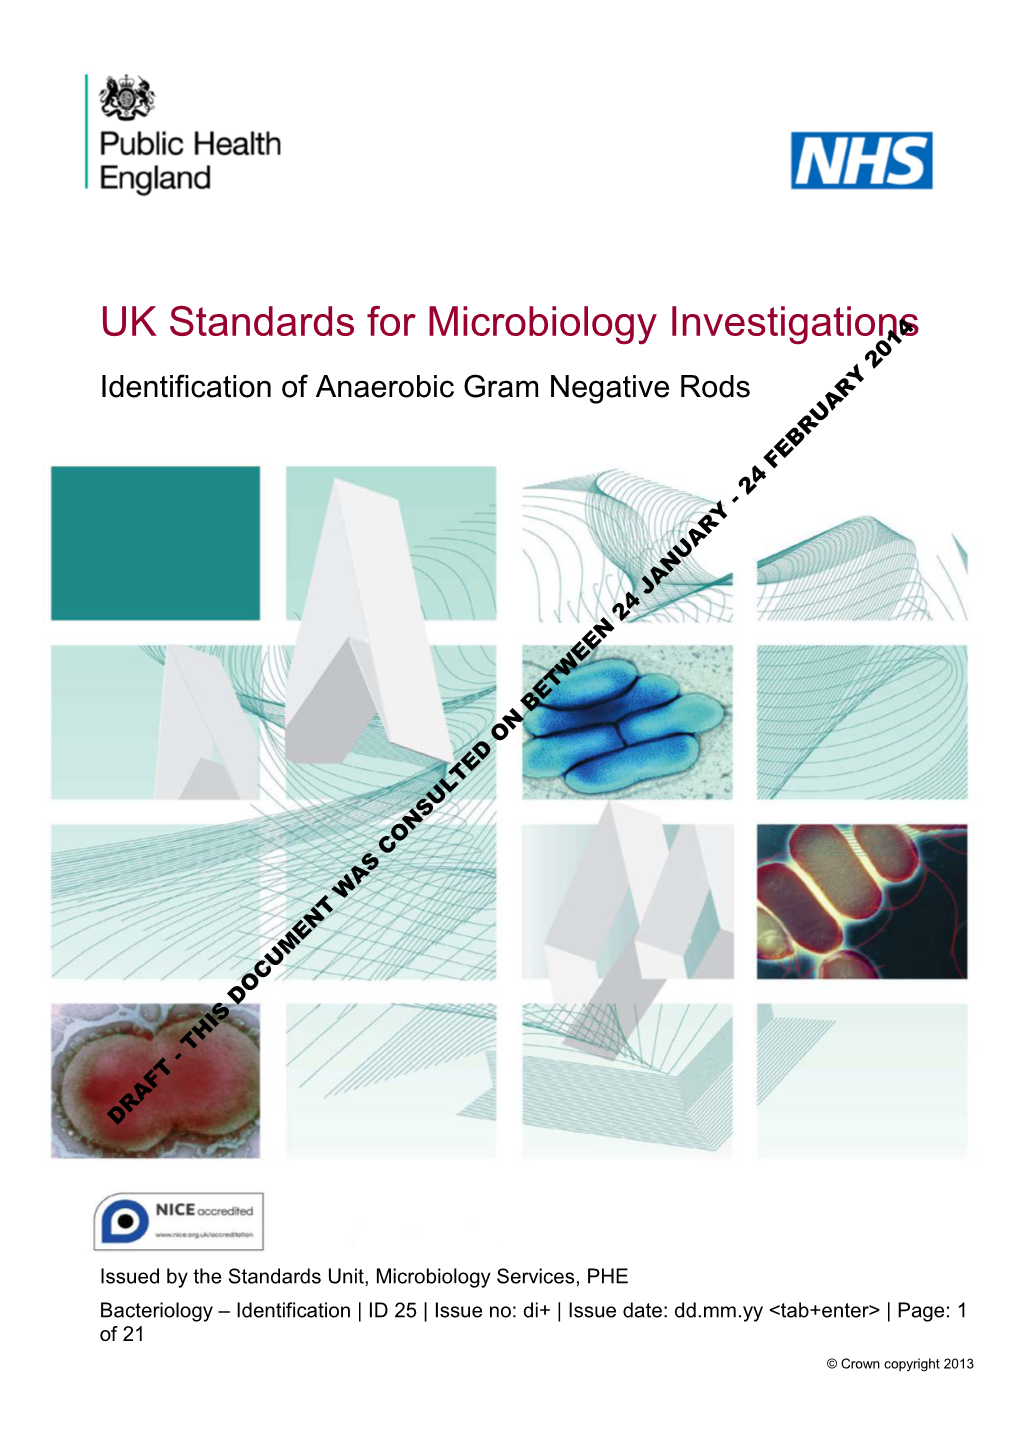 Identification of Anaerobic Gram Negative Rods